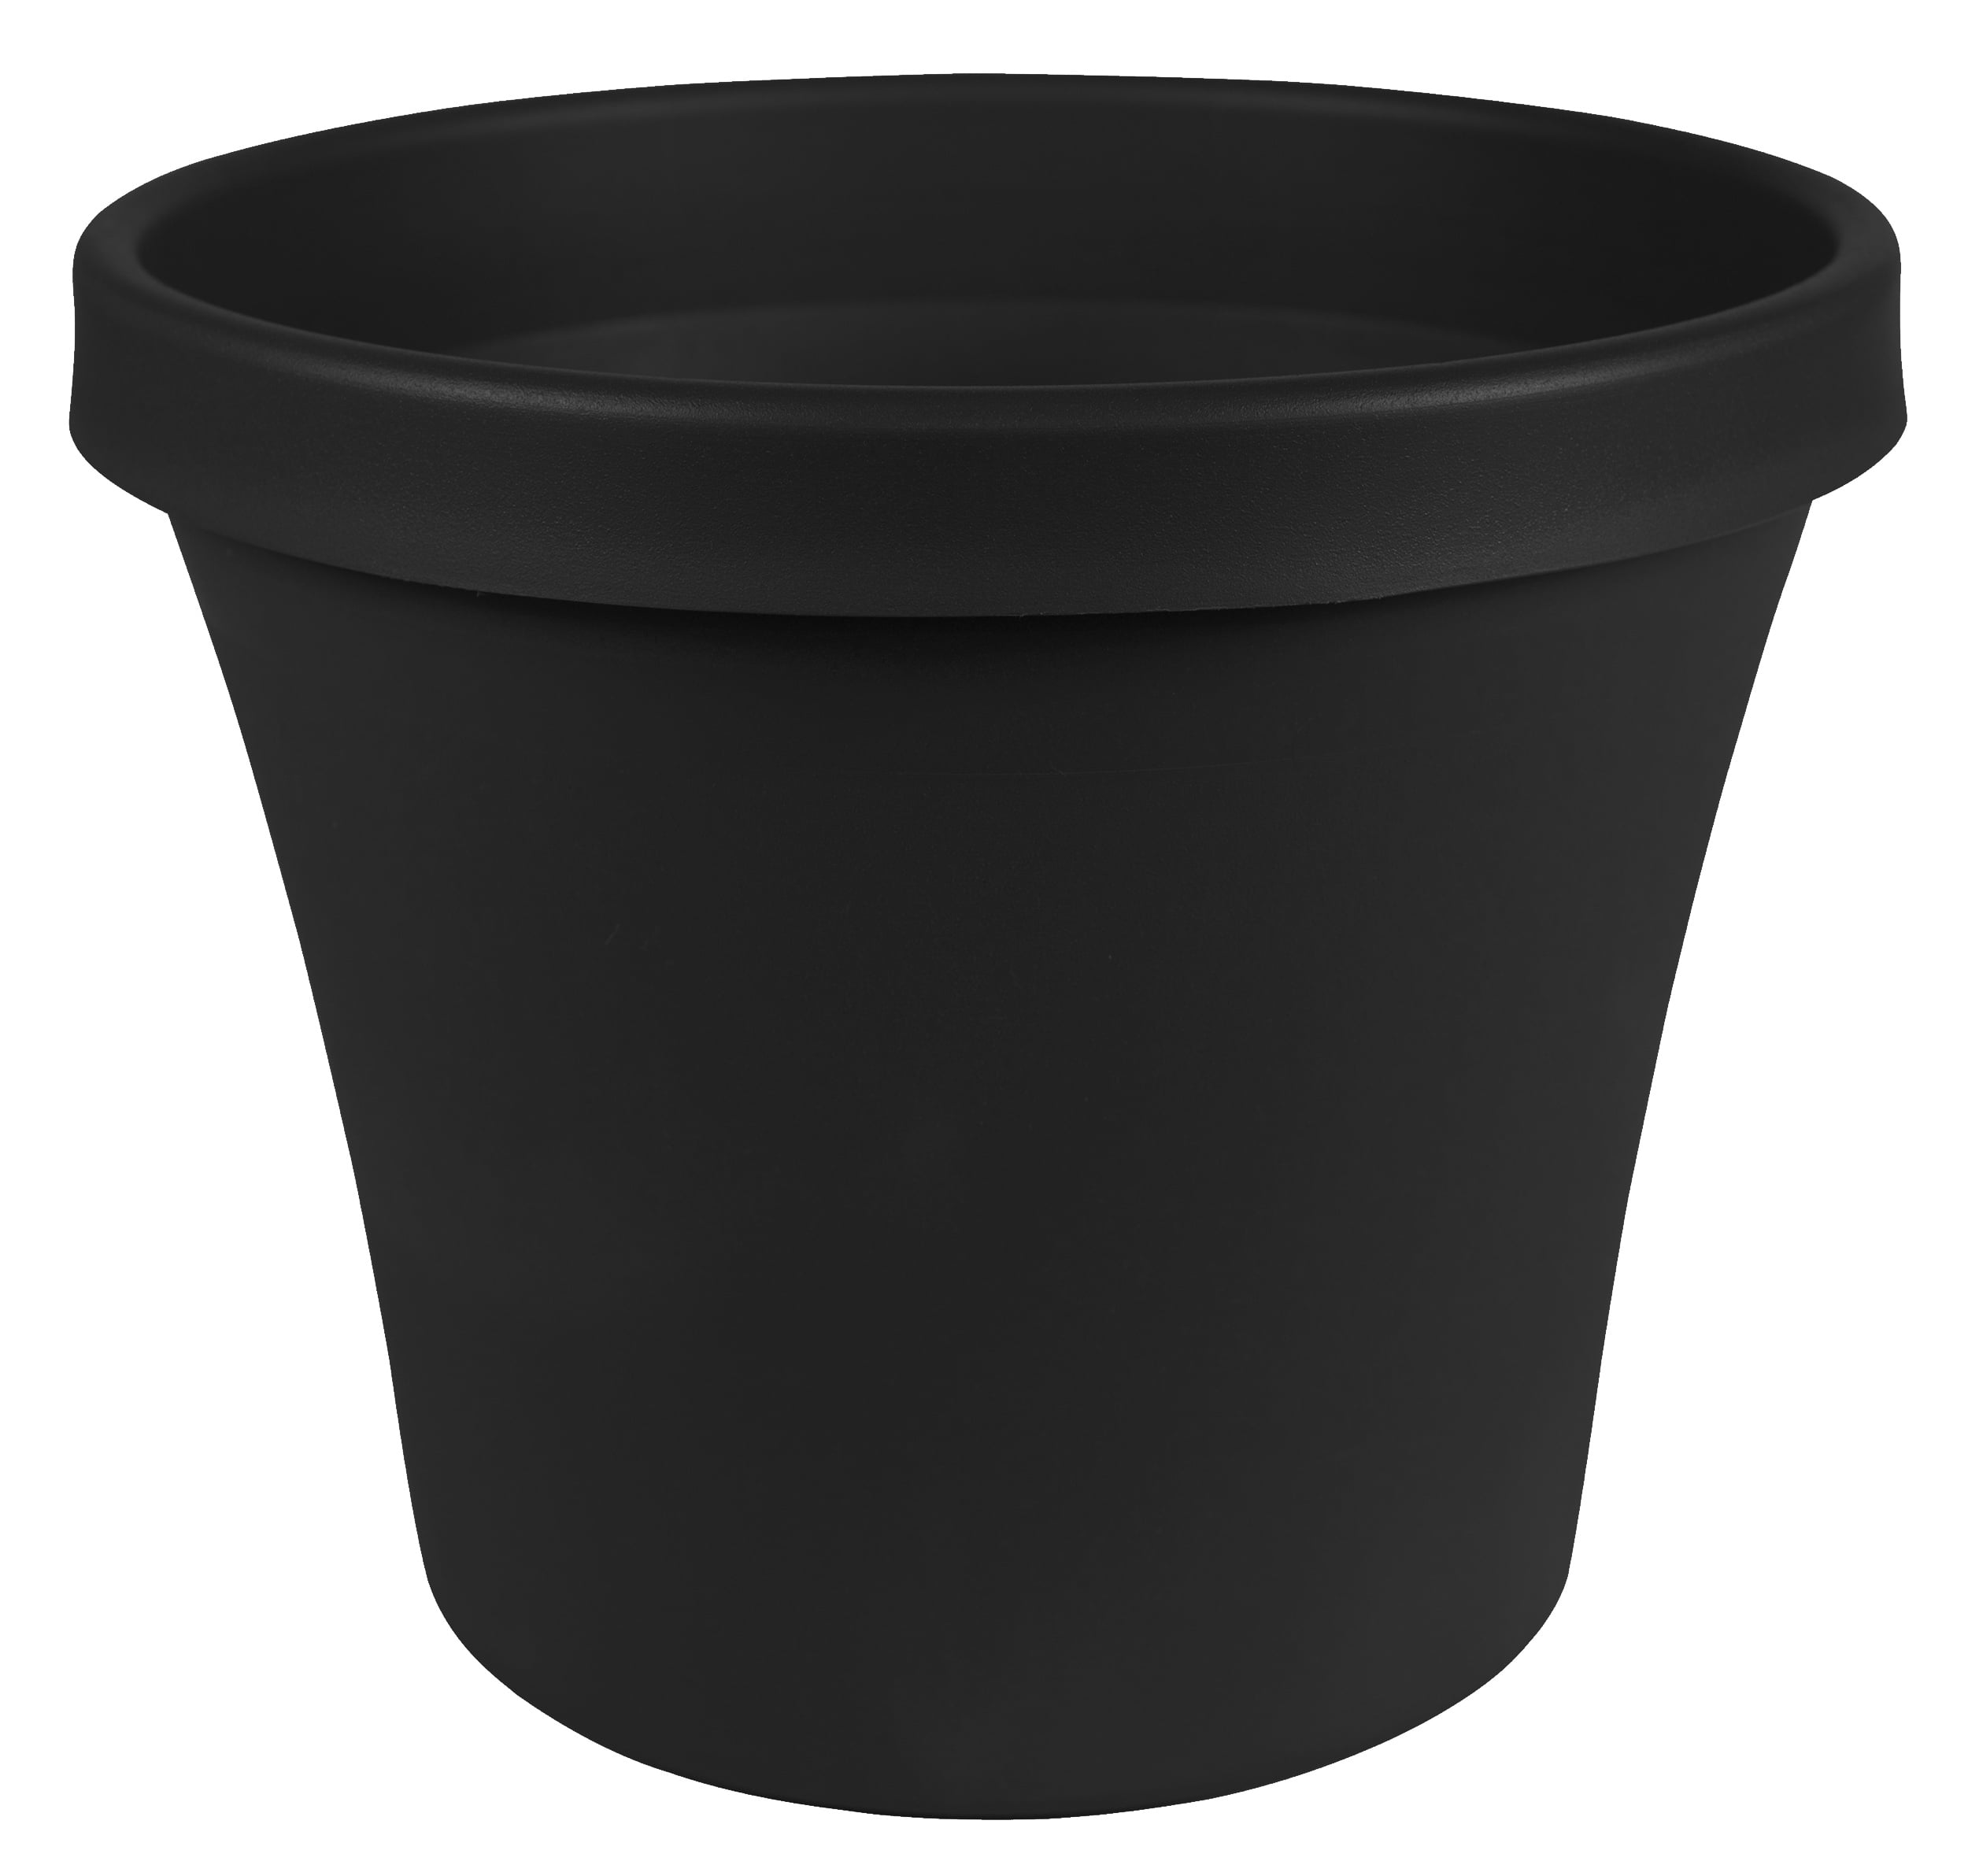 Strong Black Plastic 20 Litre Round Plant Flower Pot Growing Hydroponics X5 